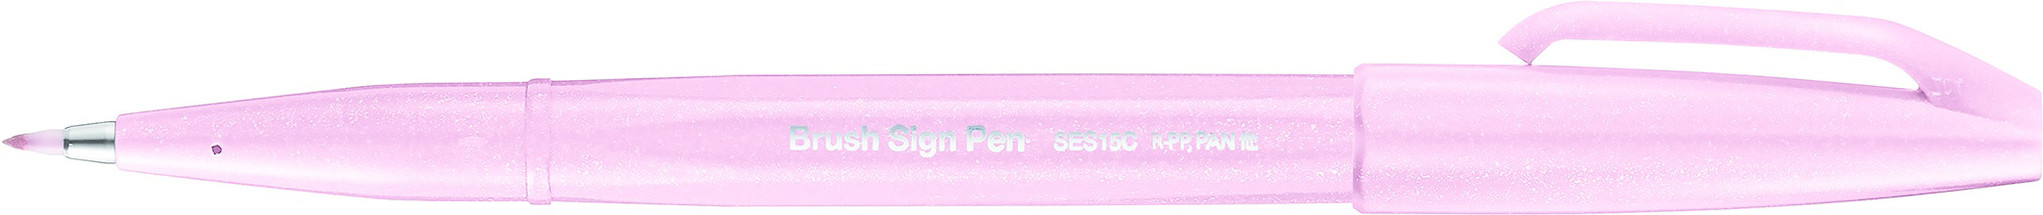 Brush sign pen pastel roze